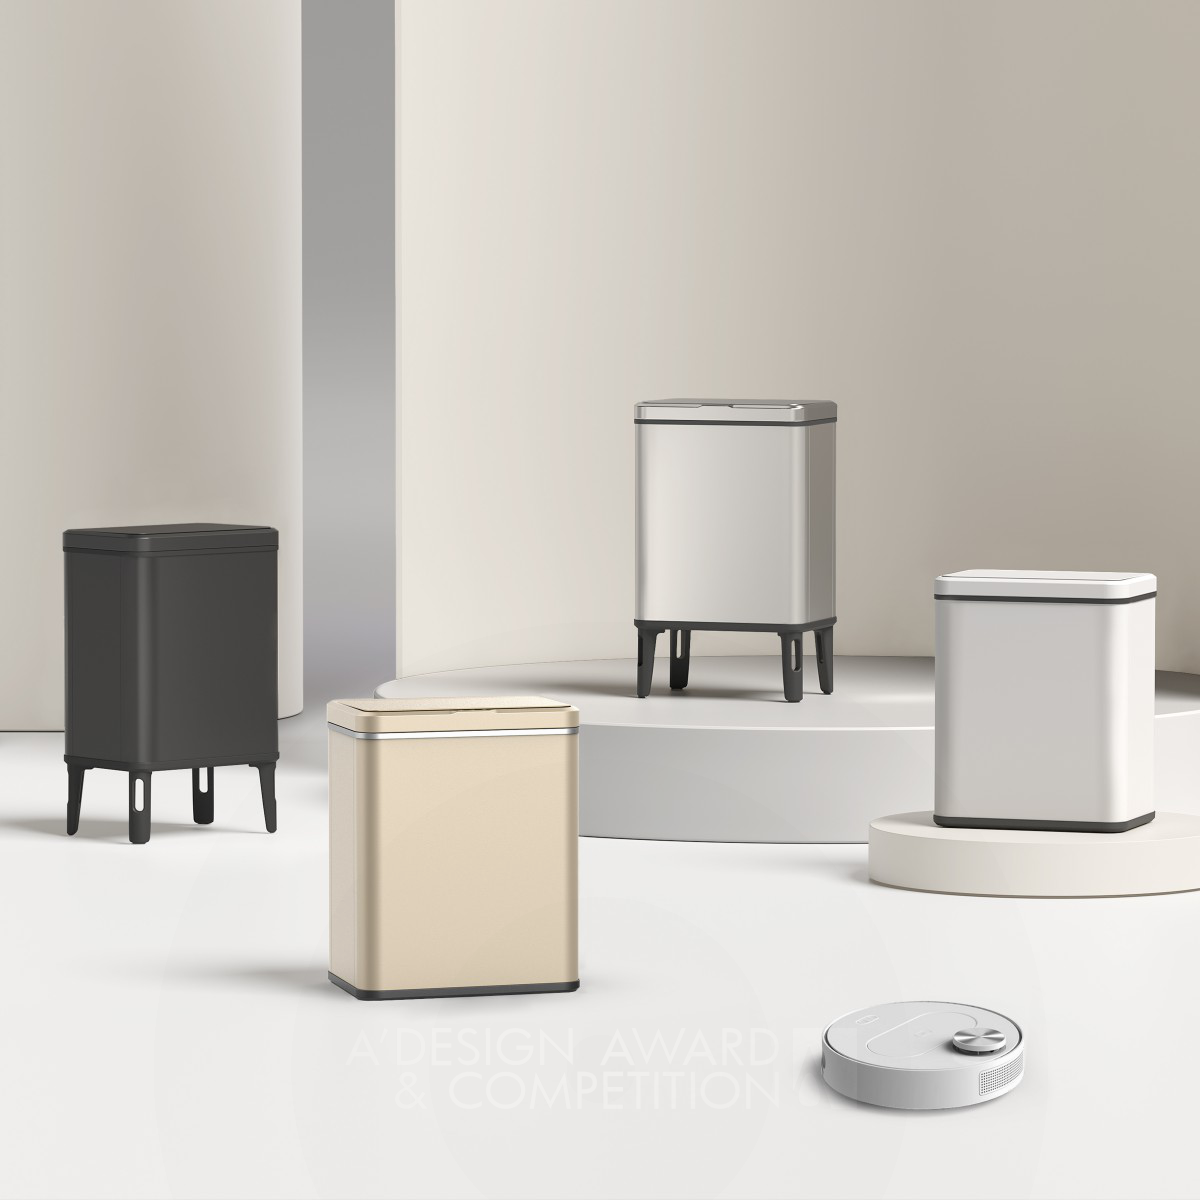 Snapfit Detachable Trash Can by Weiwen Xiong Iron Furniture Design Award Winner 2024 